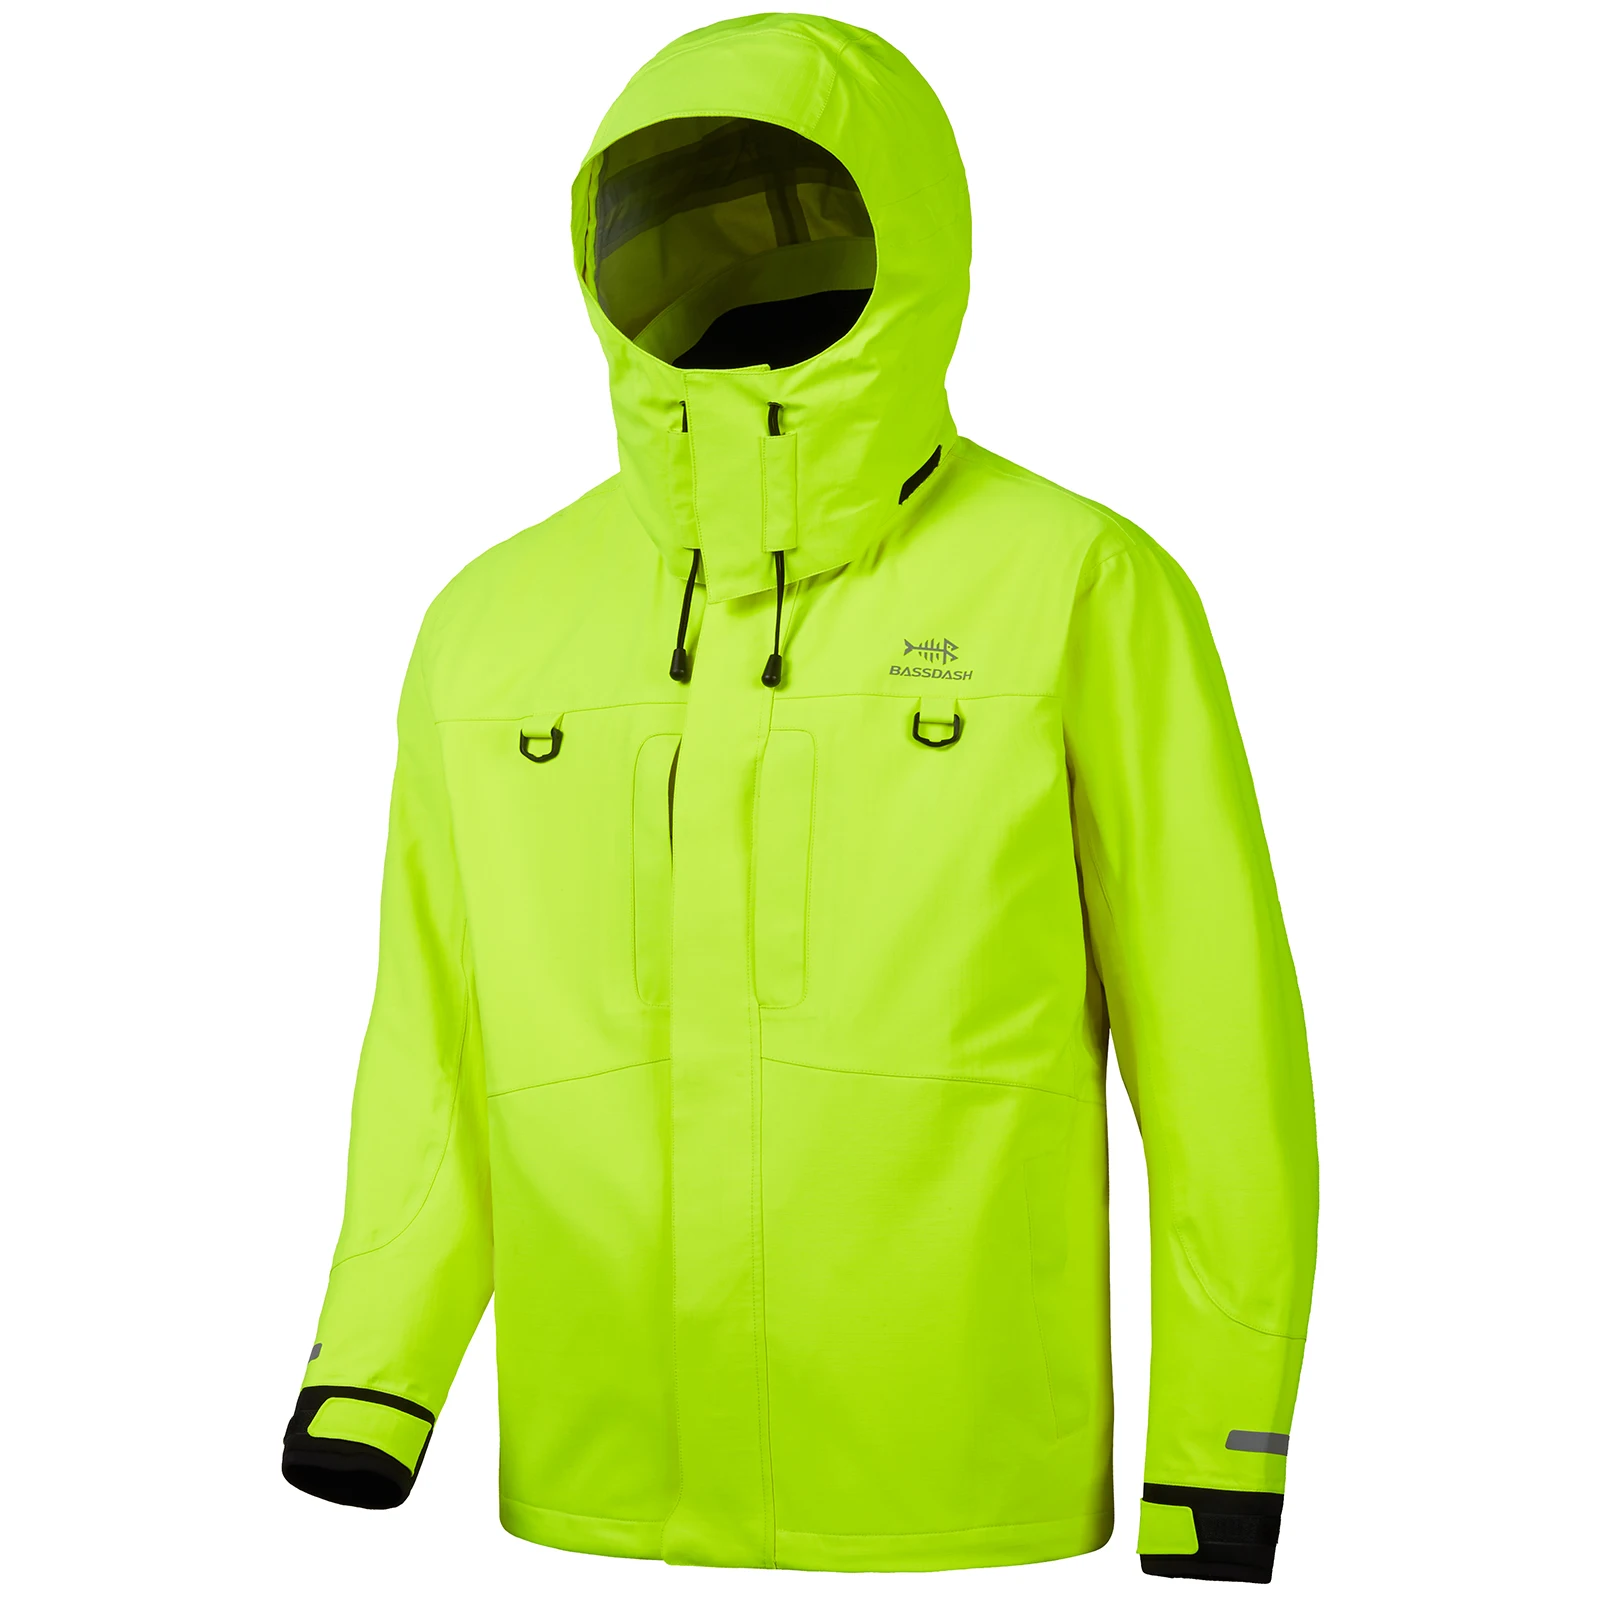 Bassdash Fluorescent Yellow Fishing Jackets Men Women Waterproof Breathable  Hunting Coat Outdoor Hiking Biking Raincoat